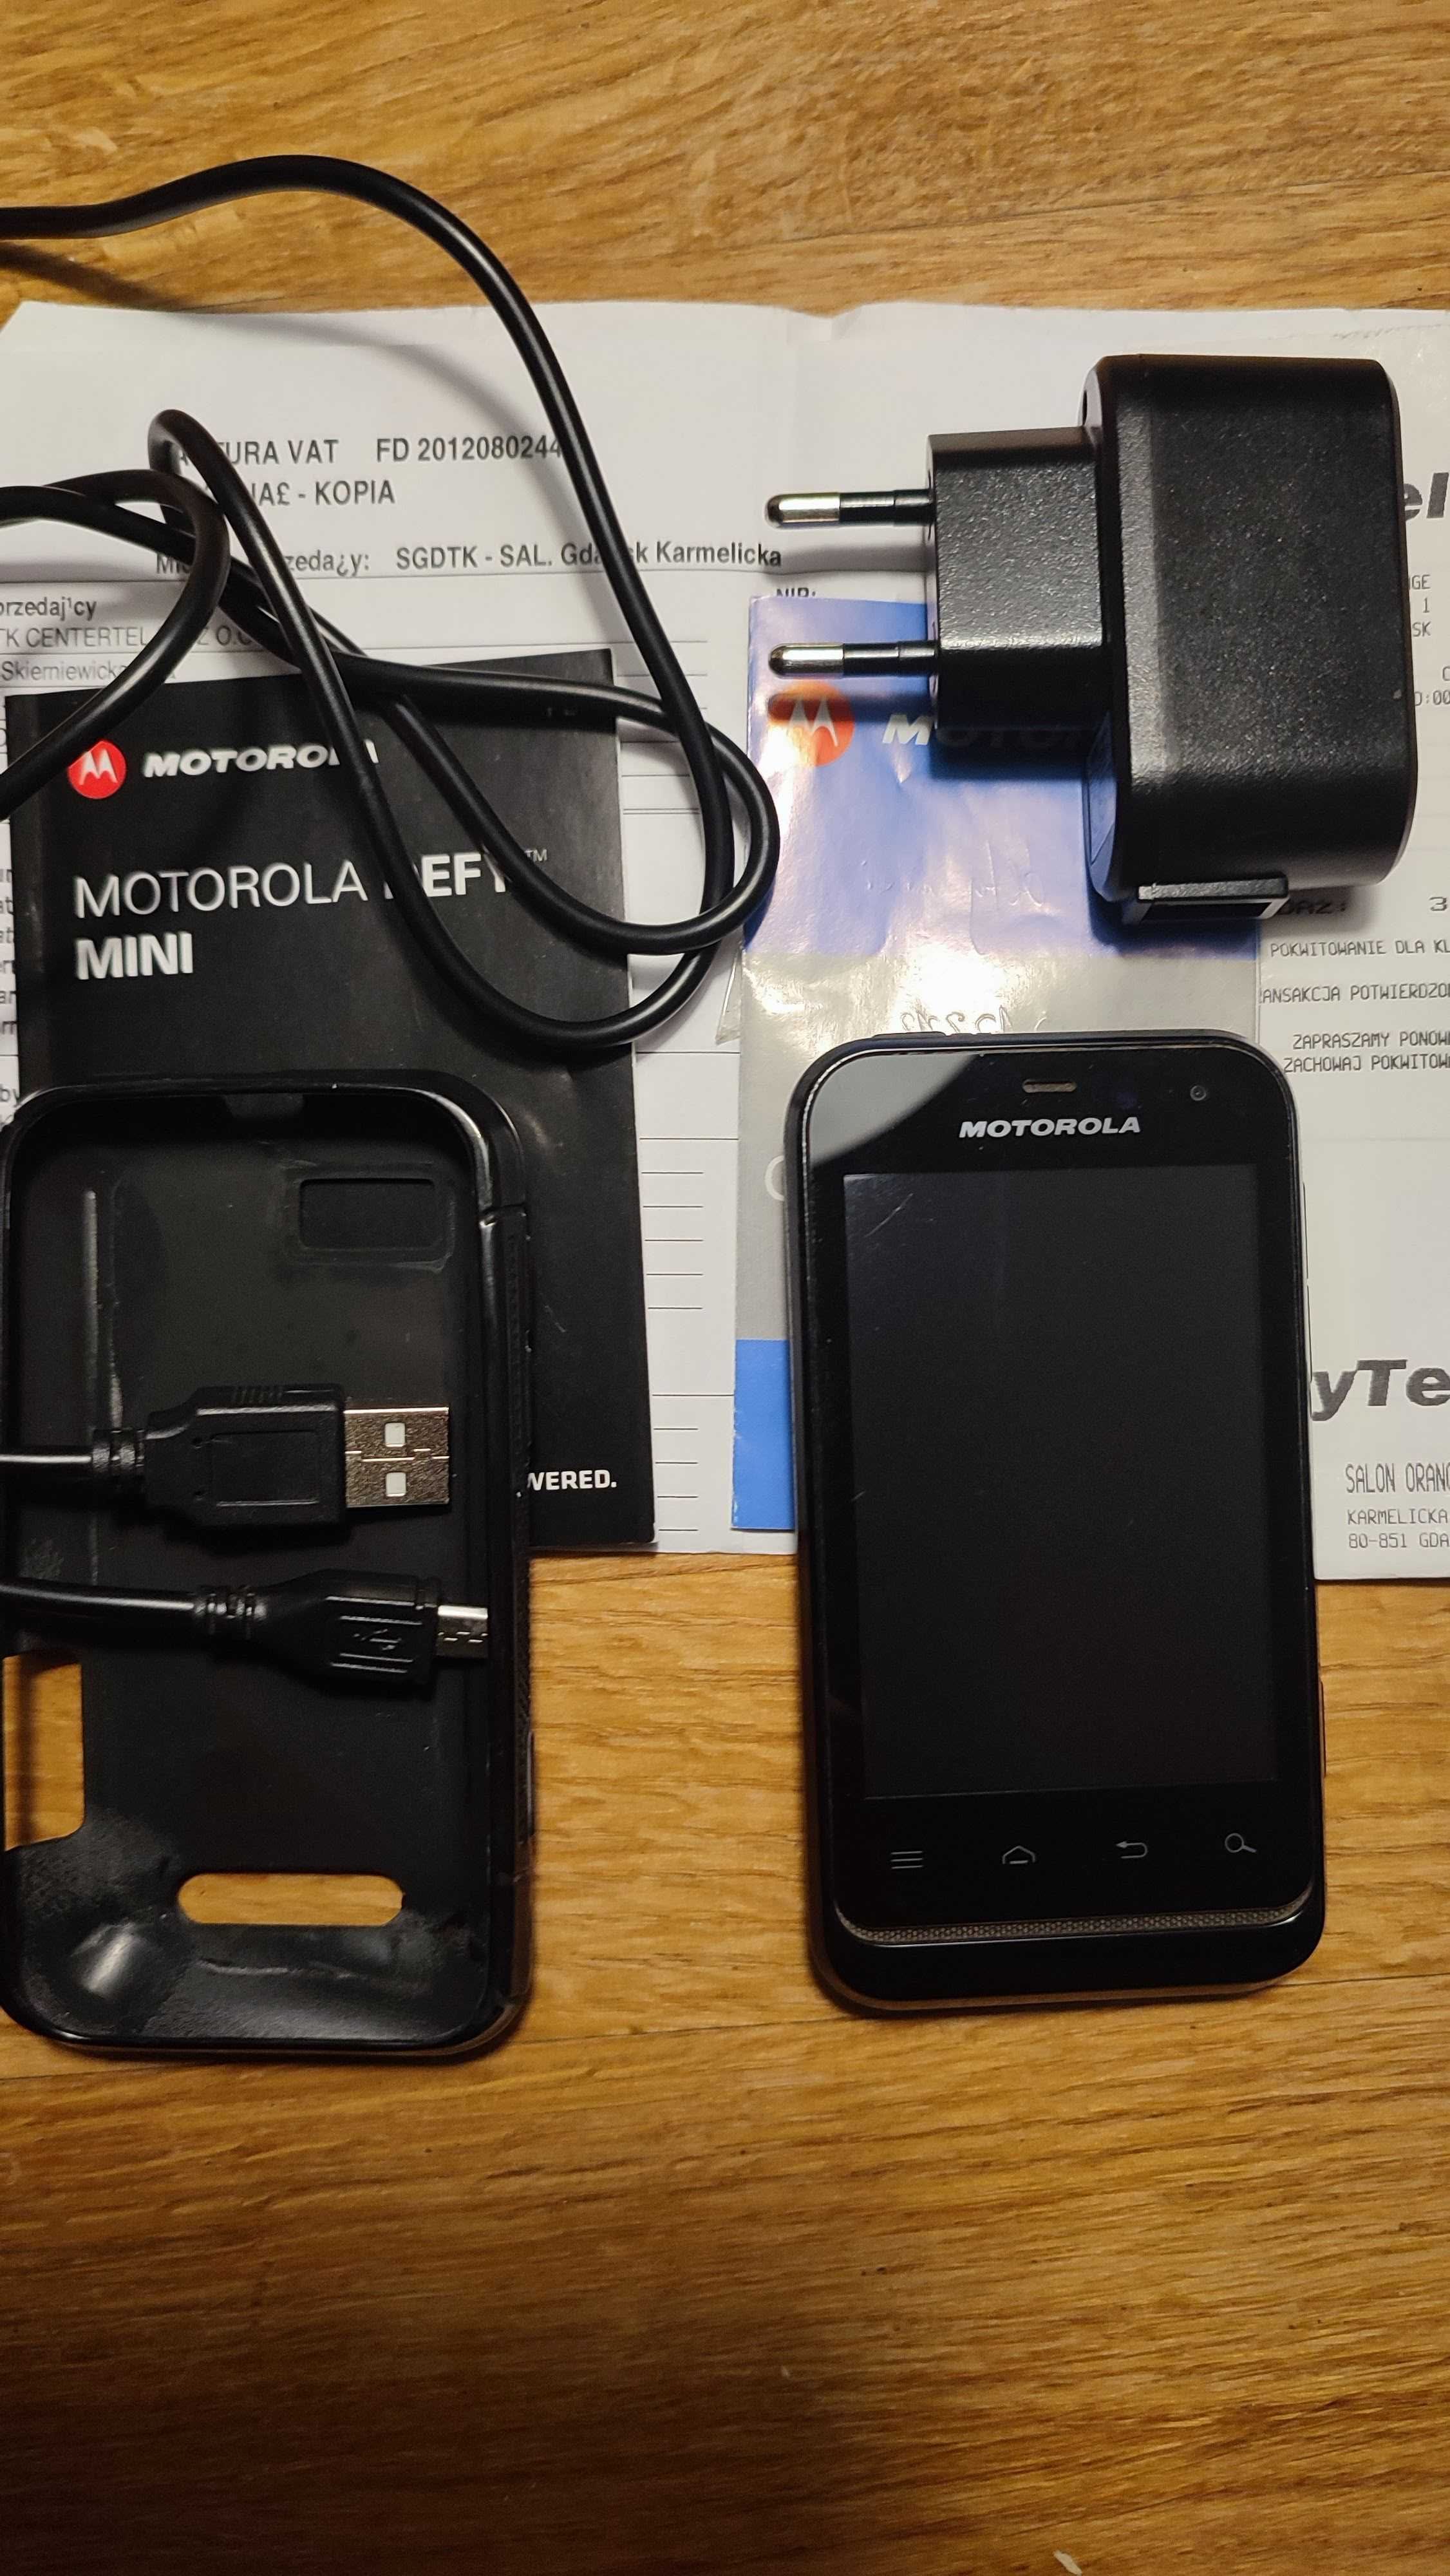 Motorola Defy Mini komplet kolekcjonerski